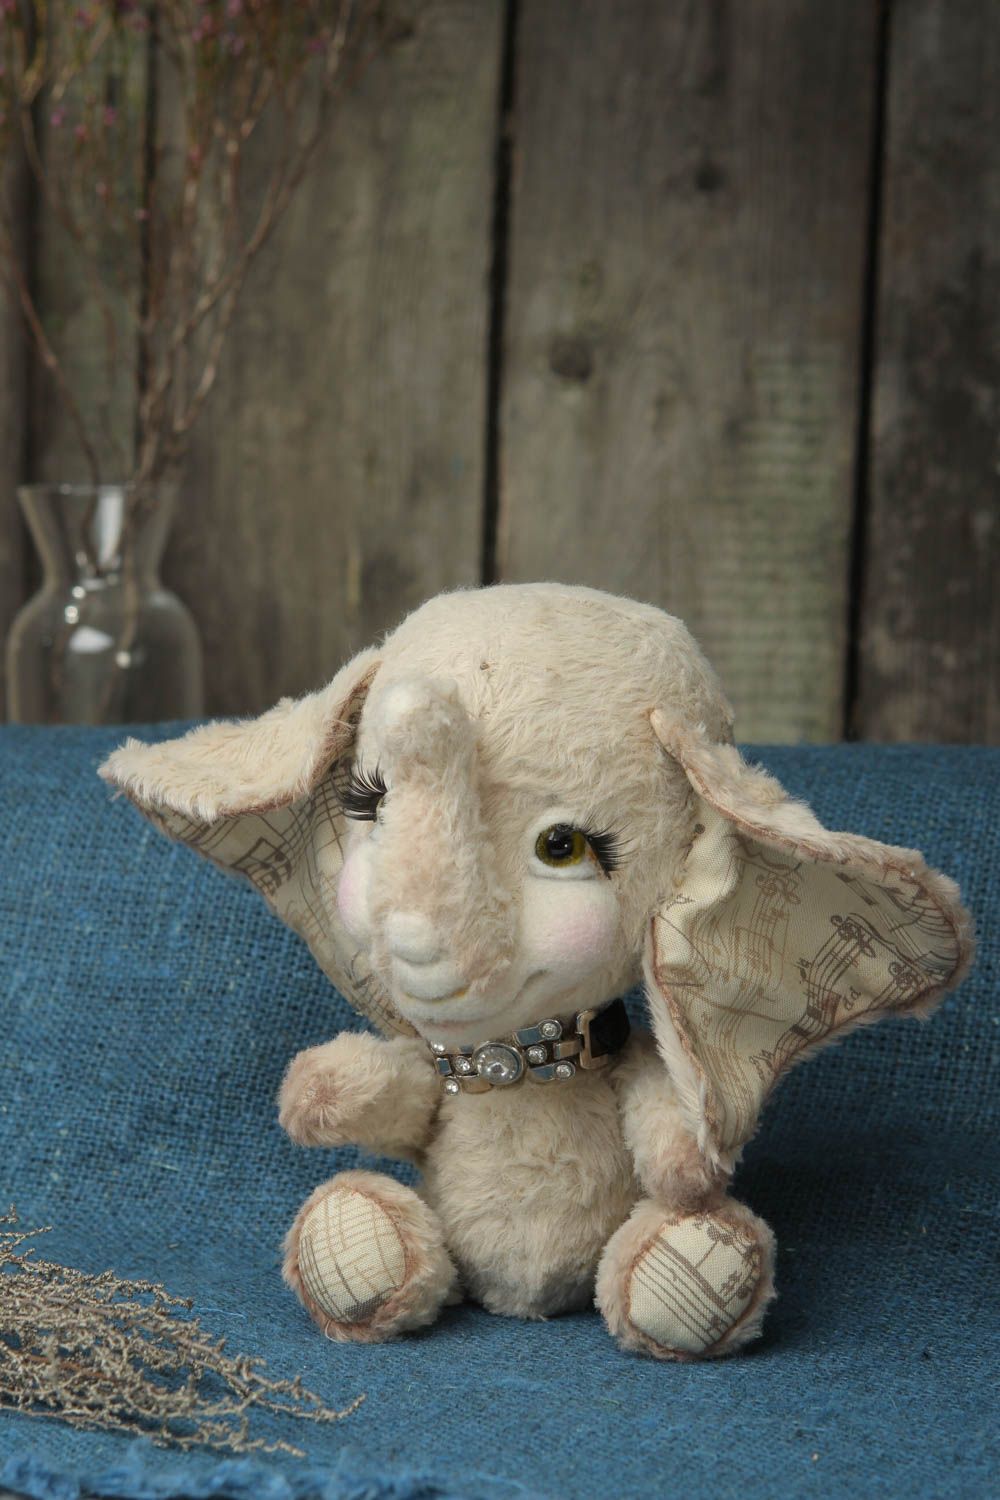 Handmade toy soft animal toy designer toy for baby nursery decor gift ideas photo 1